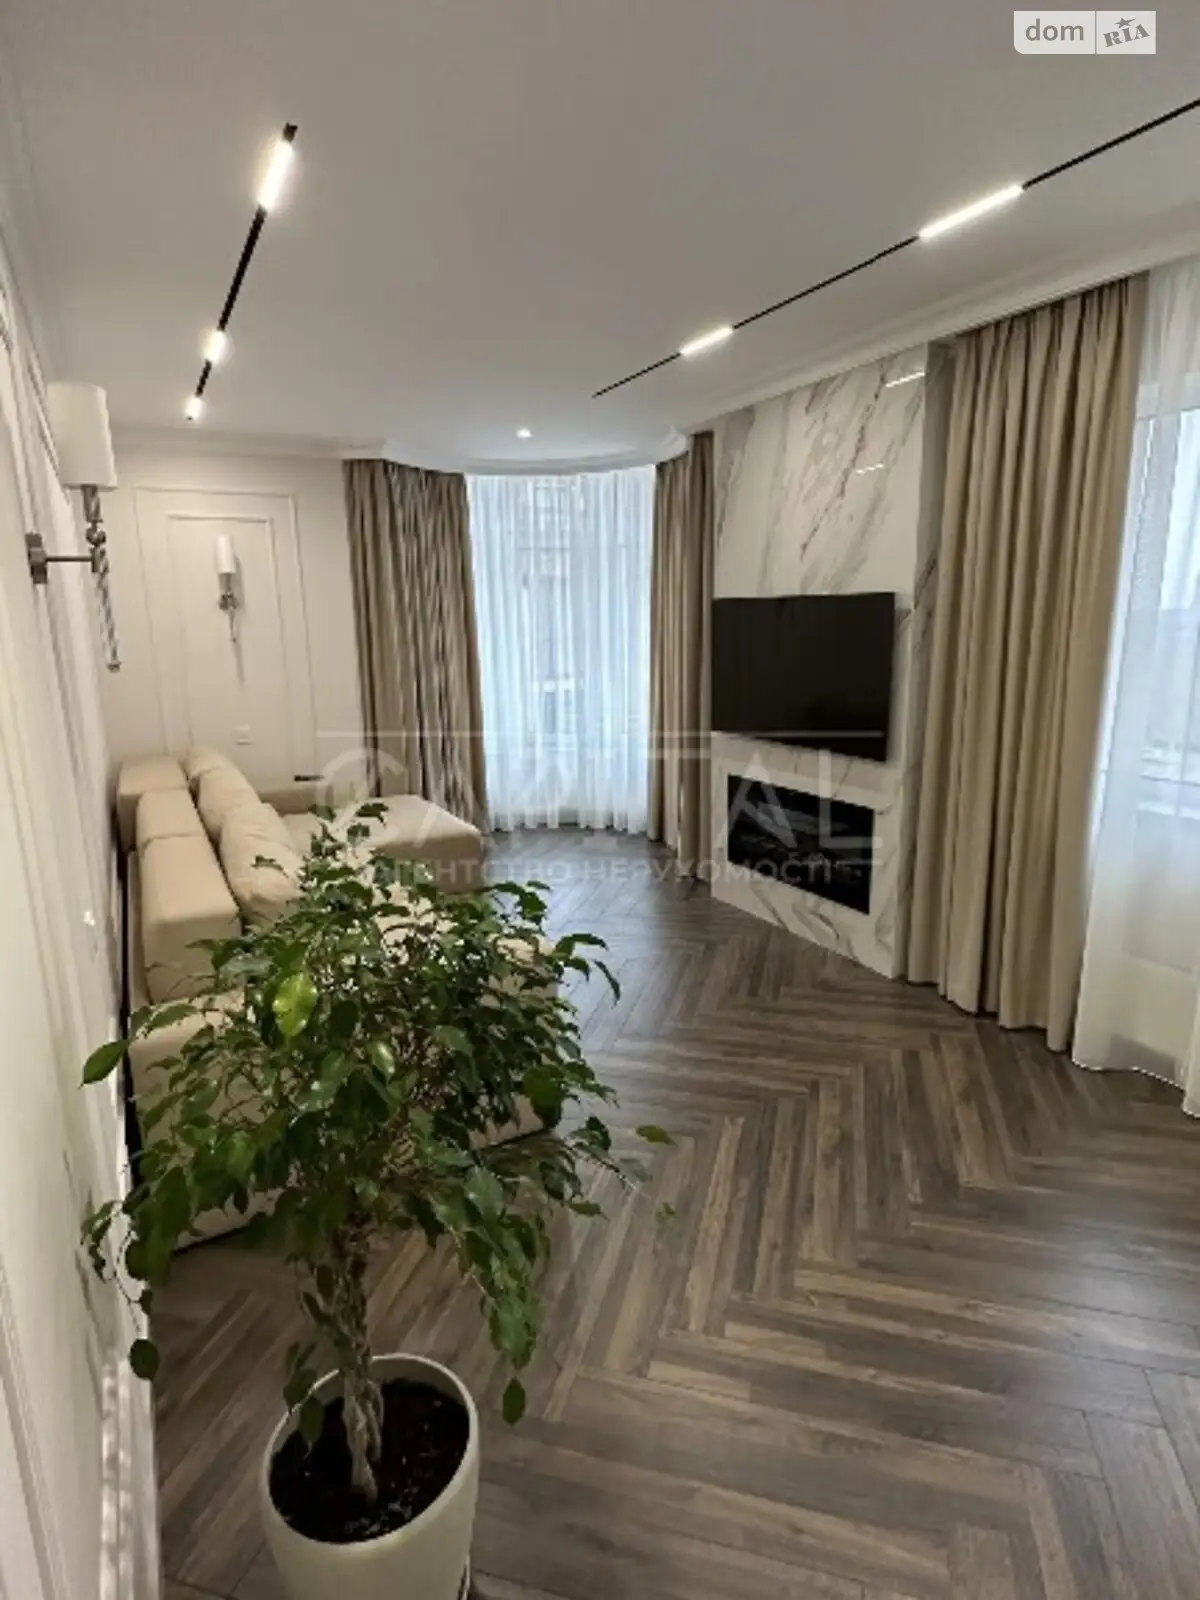 Продается 2-комнатная квартира 86 кв. м в Новоселках, цена: 140000 $ - фото 1